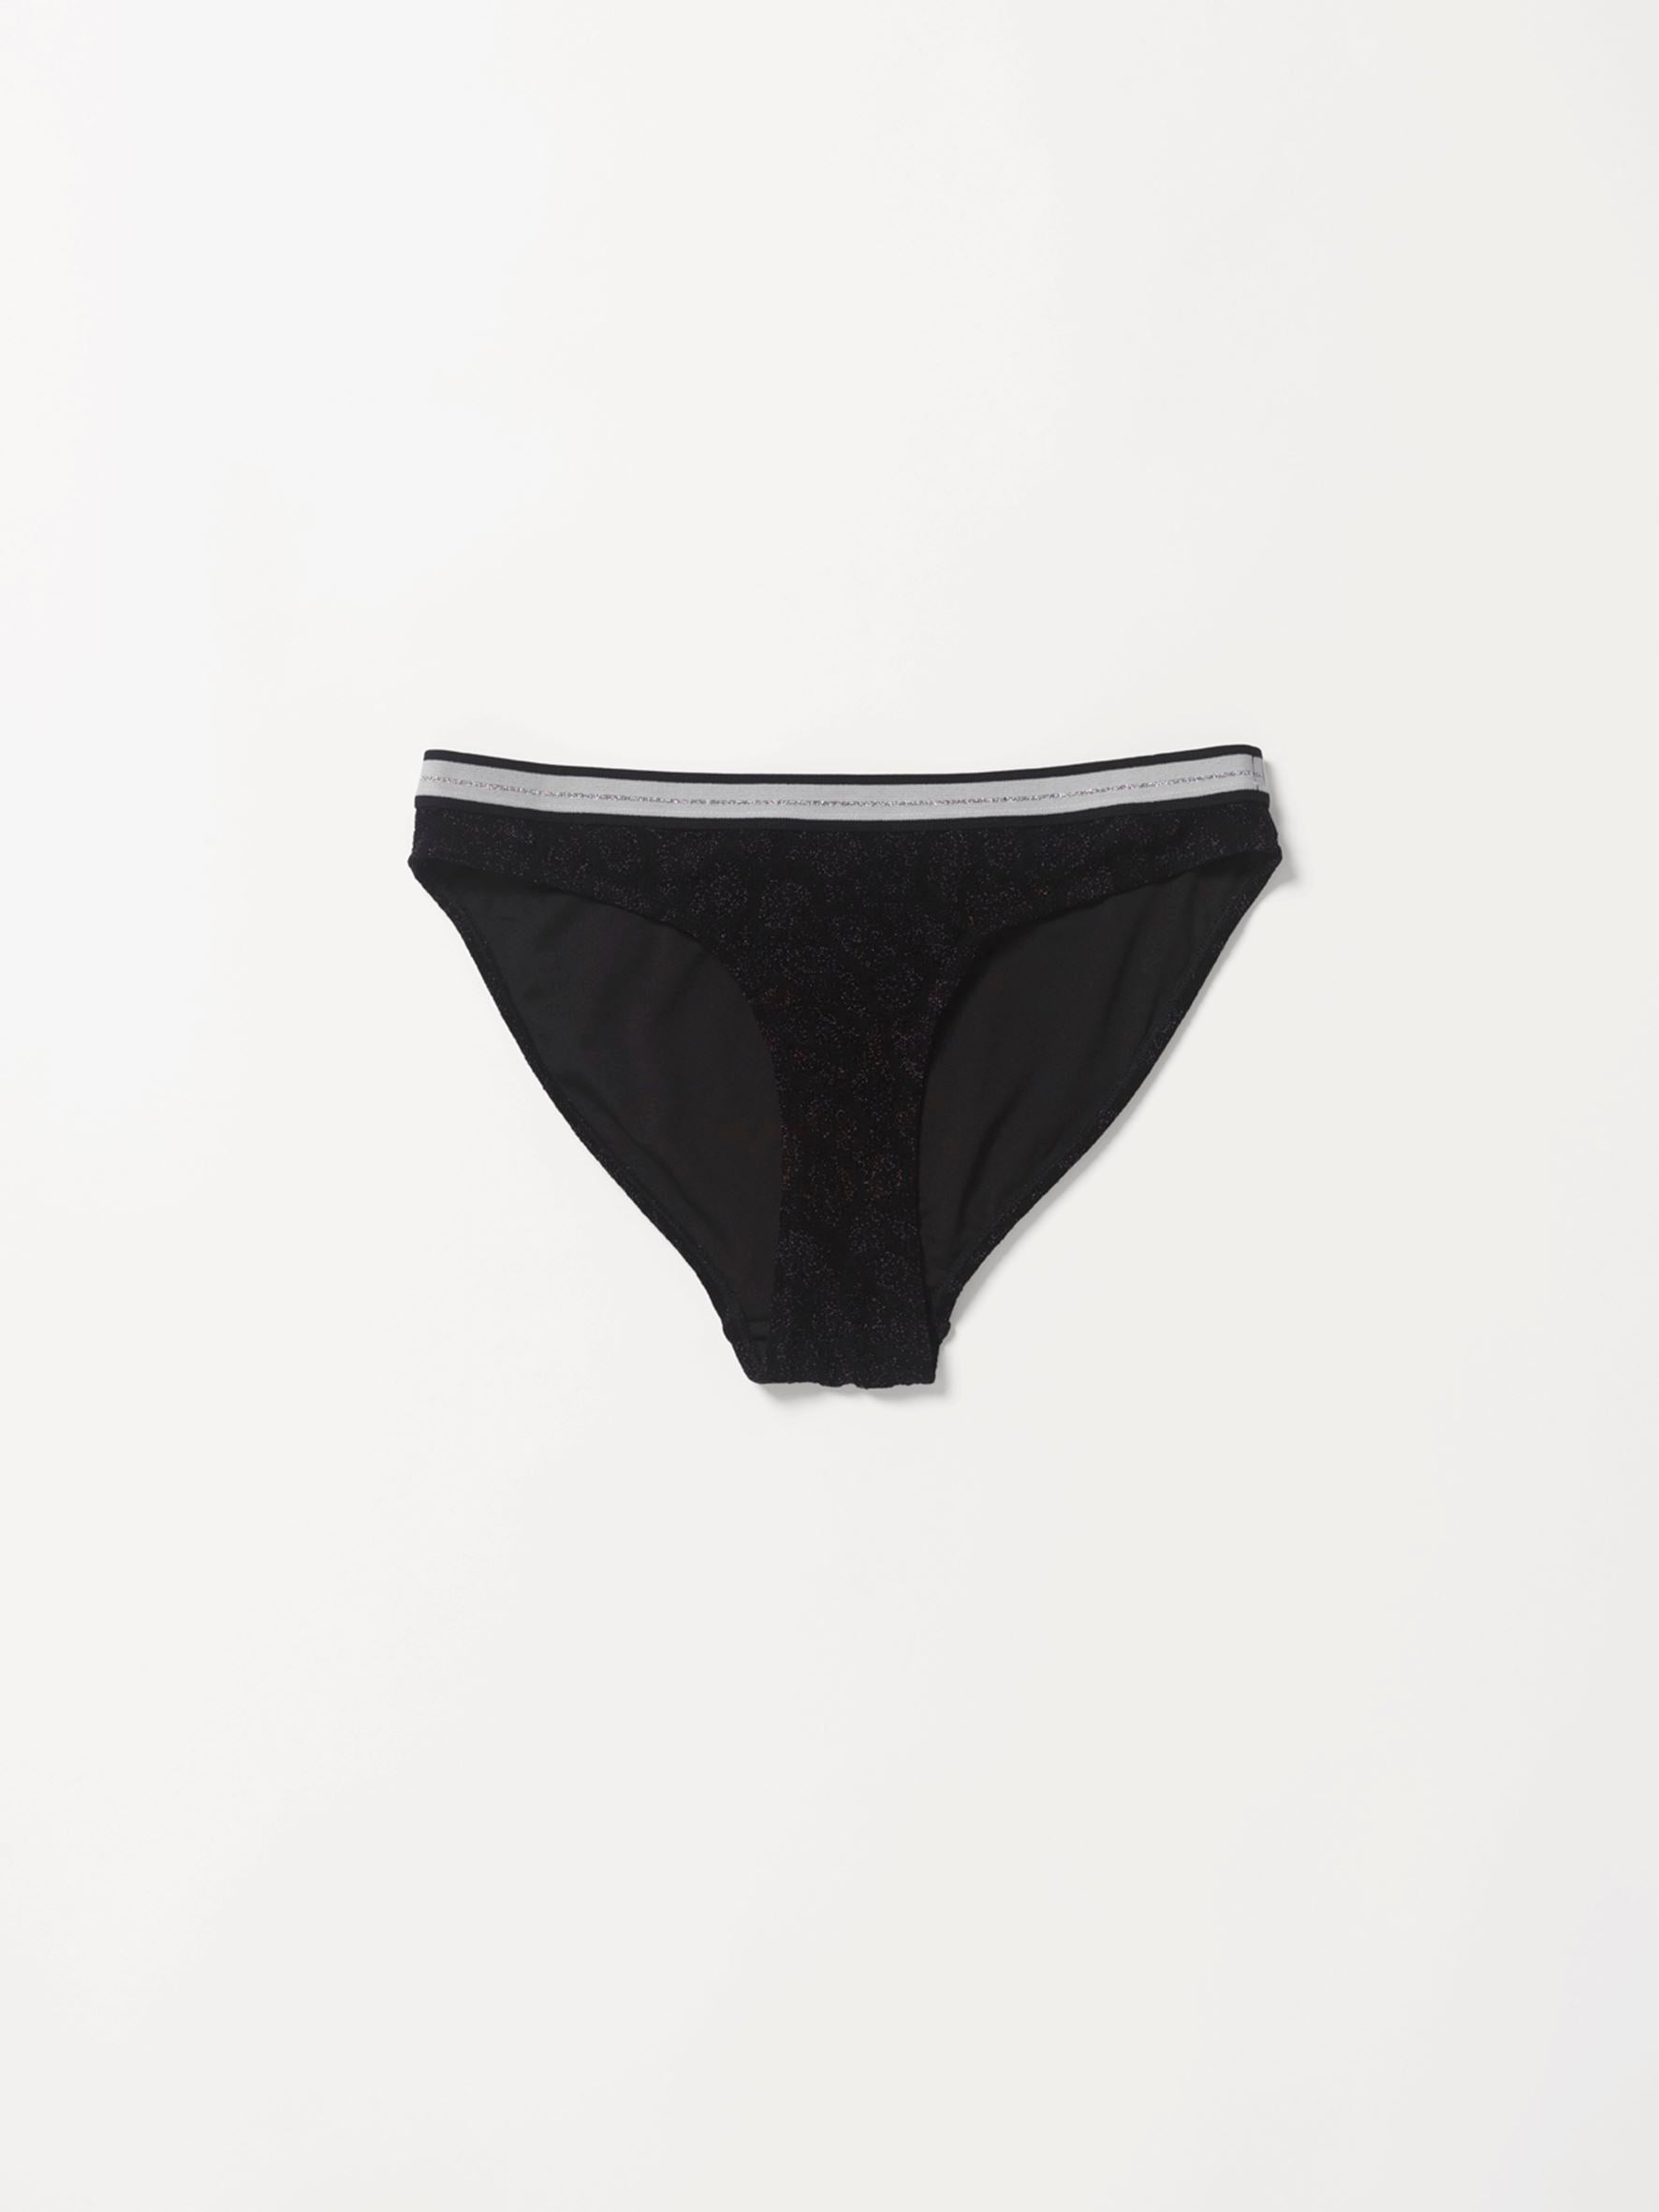 Becksöndergaard, Glitzie Elastic Bikini Bottom - Black, archive, archive, sale, sale